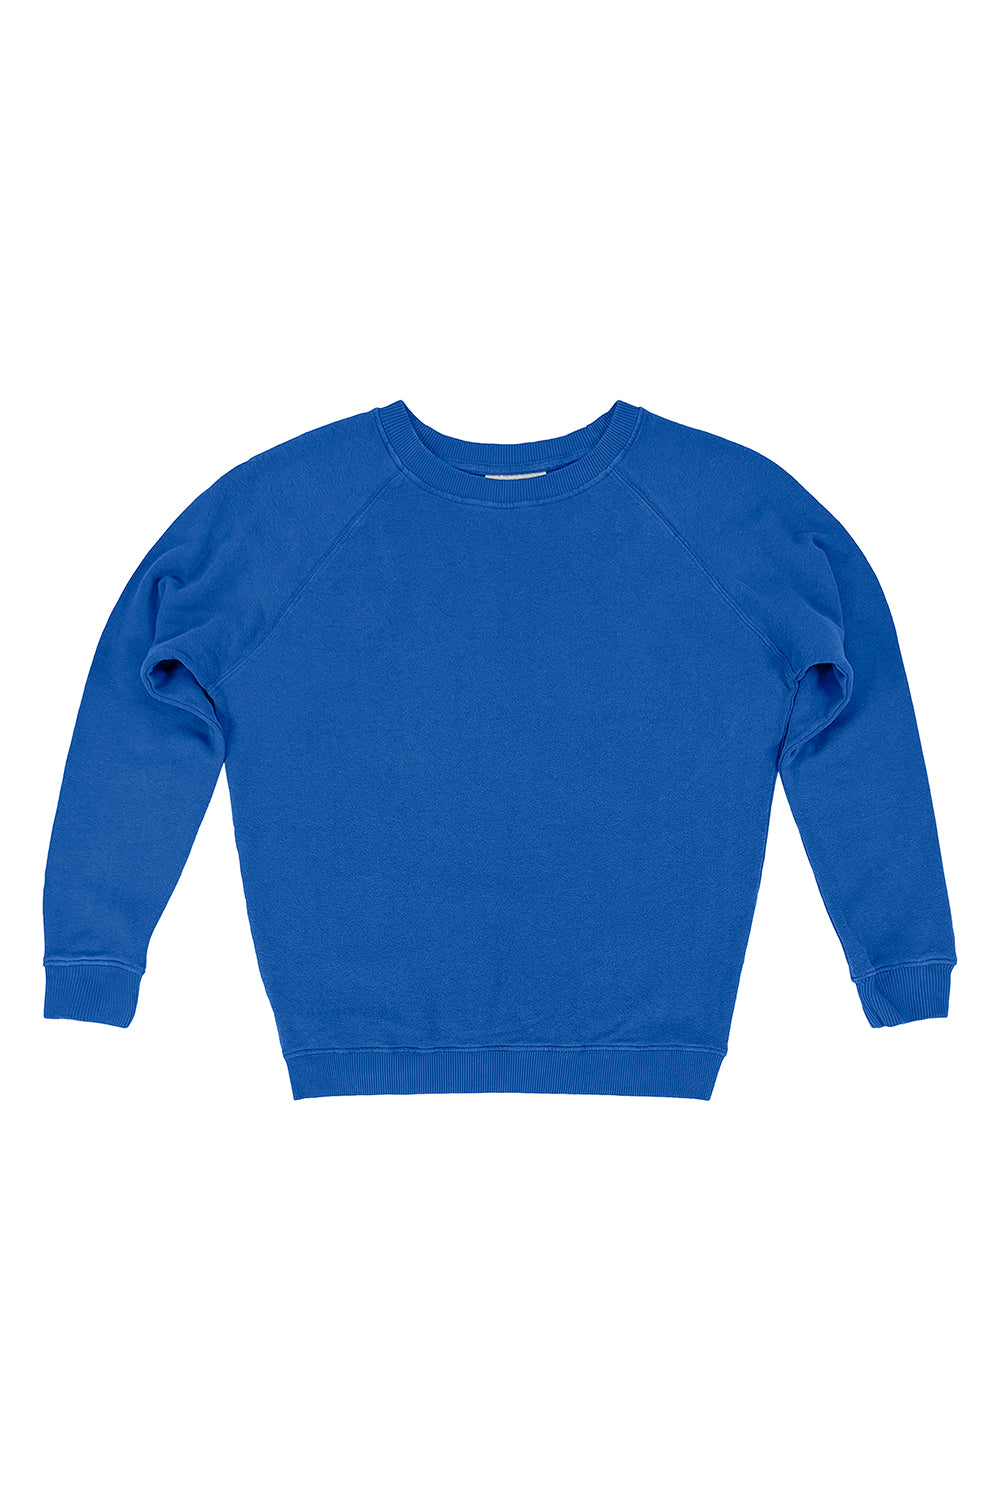 Bonfire Raglan Sweatshirt | Jungmaven Hemp Clothing & Accessories / Color: Galaxy Blue